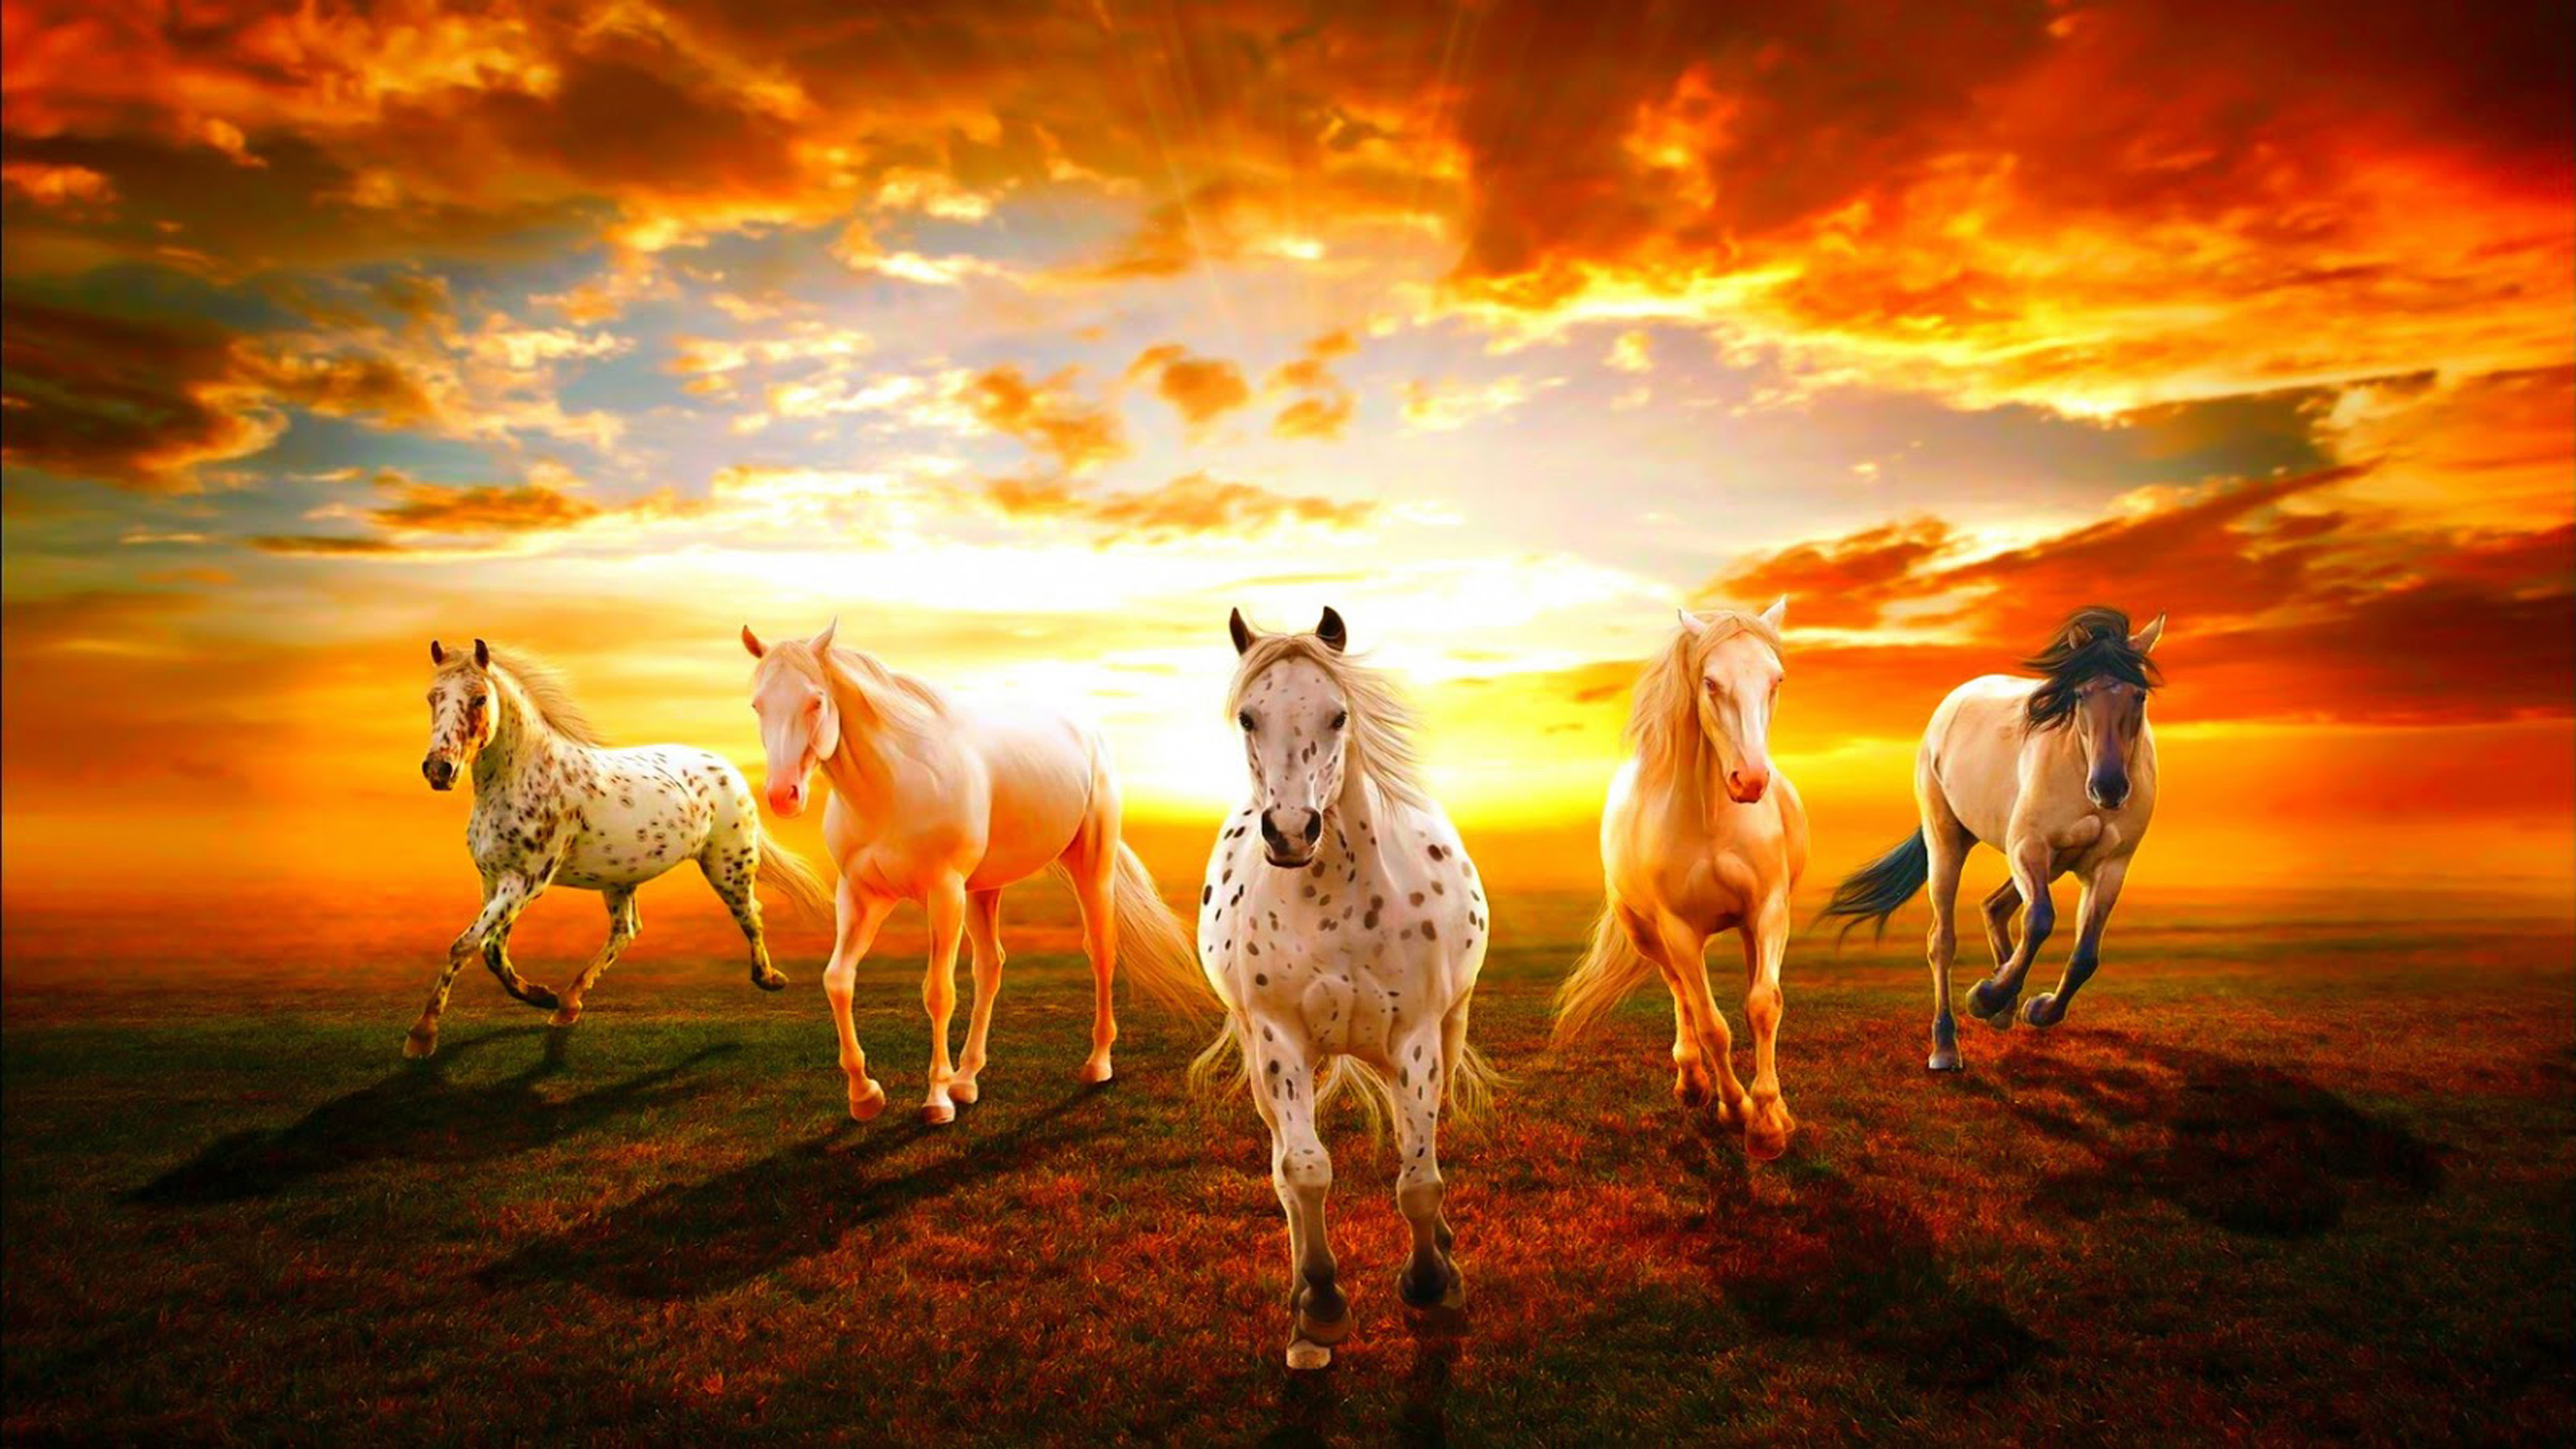 Beautiful Wallpaper Hd Horses Sunset Hd Wallpaper : Wallpapers13.com